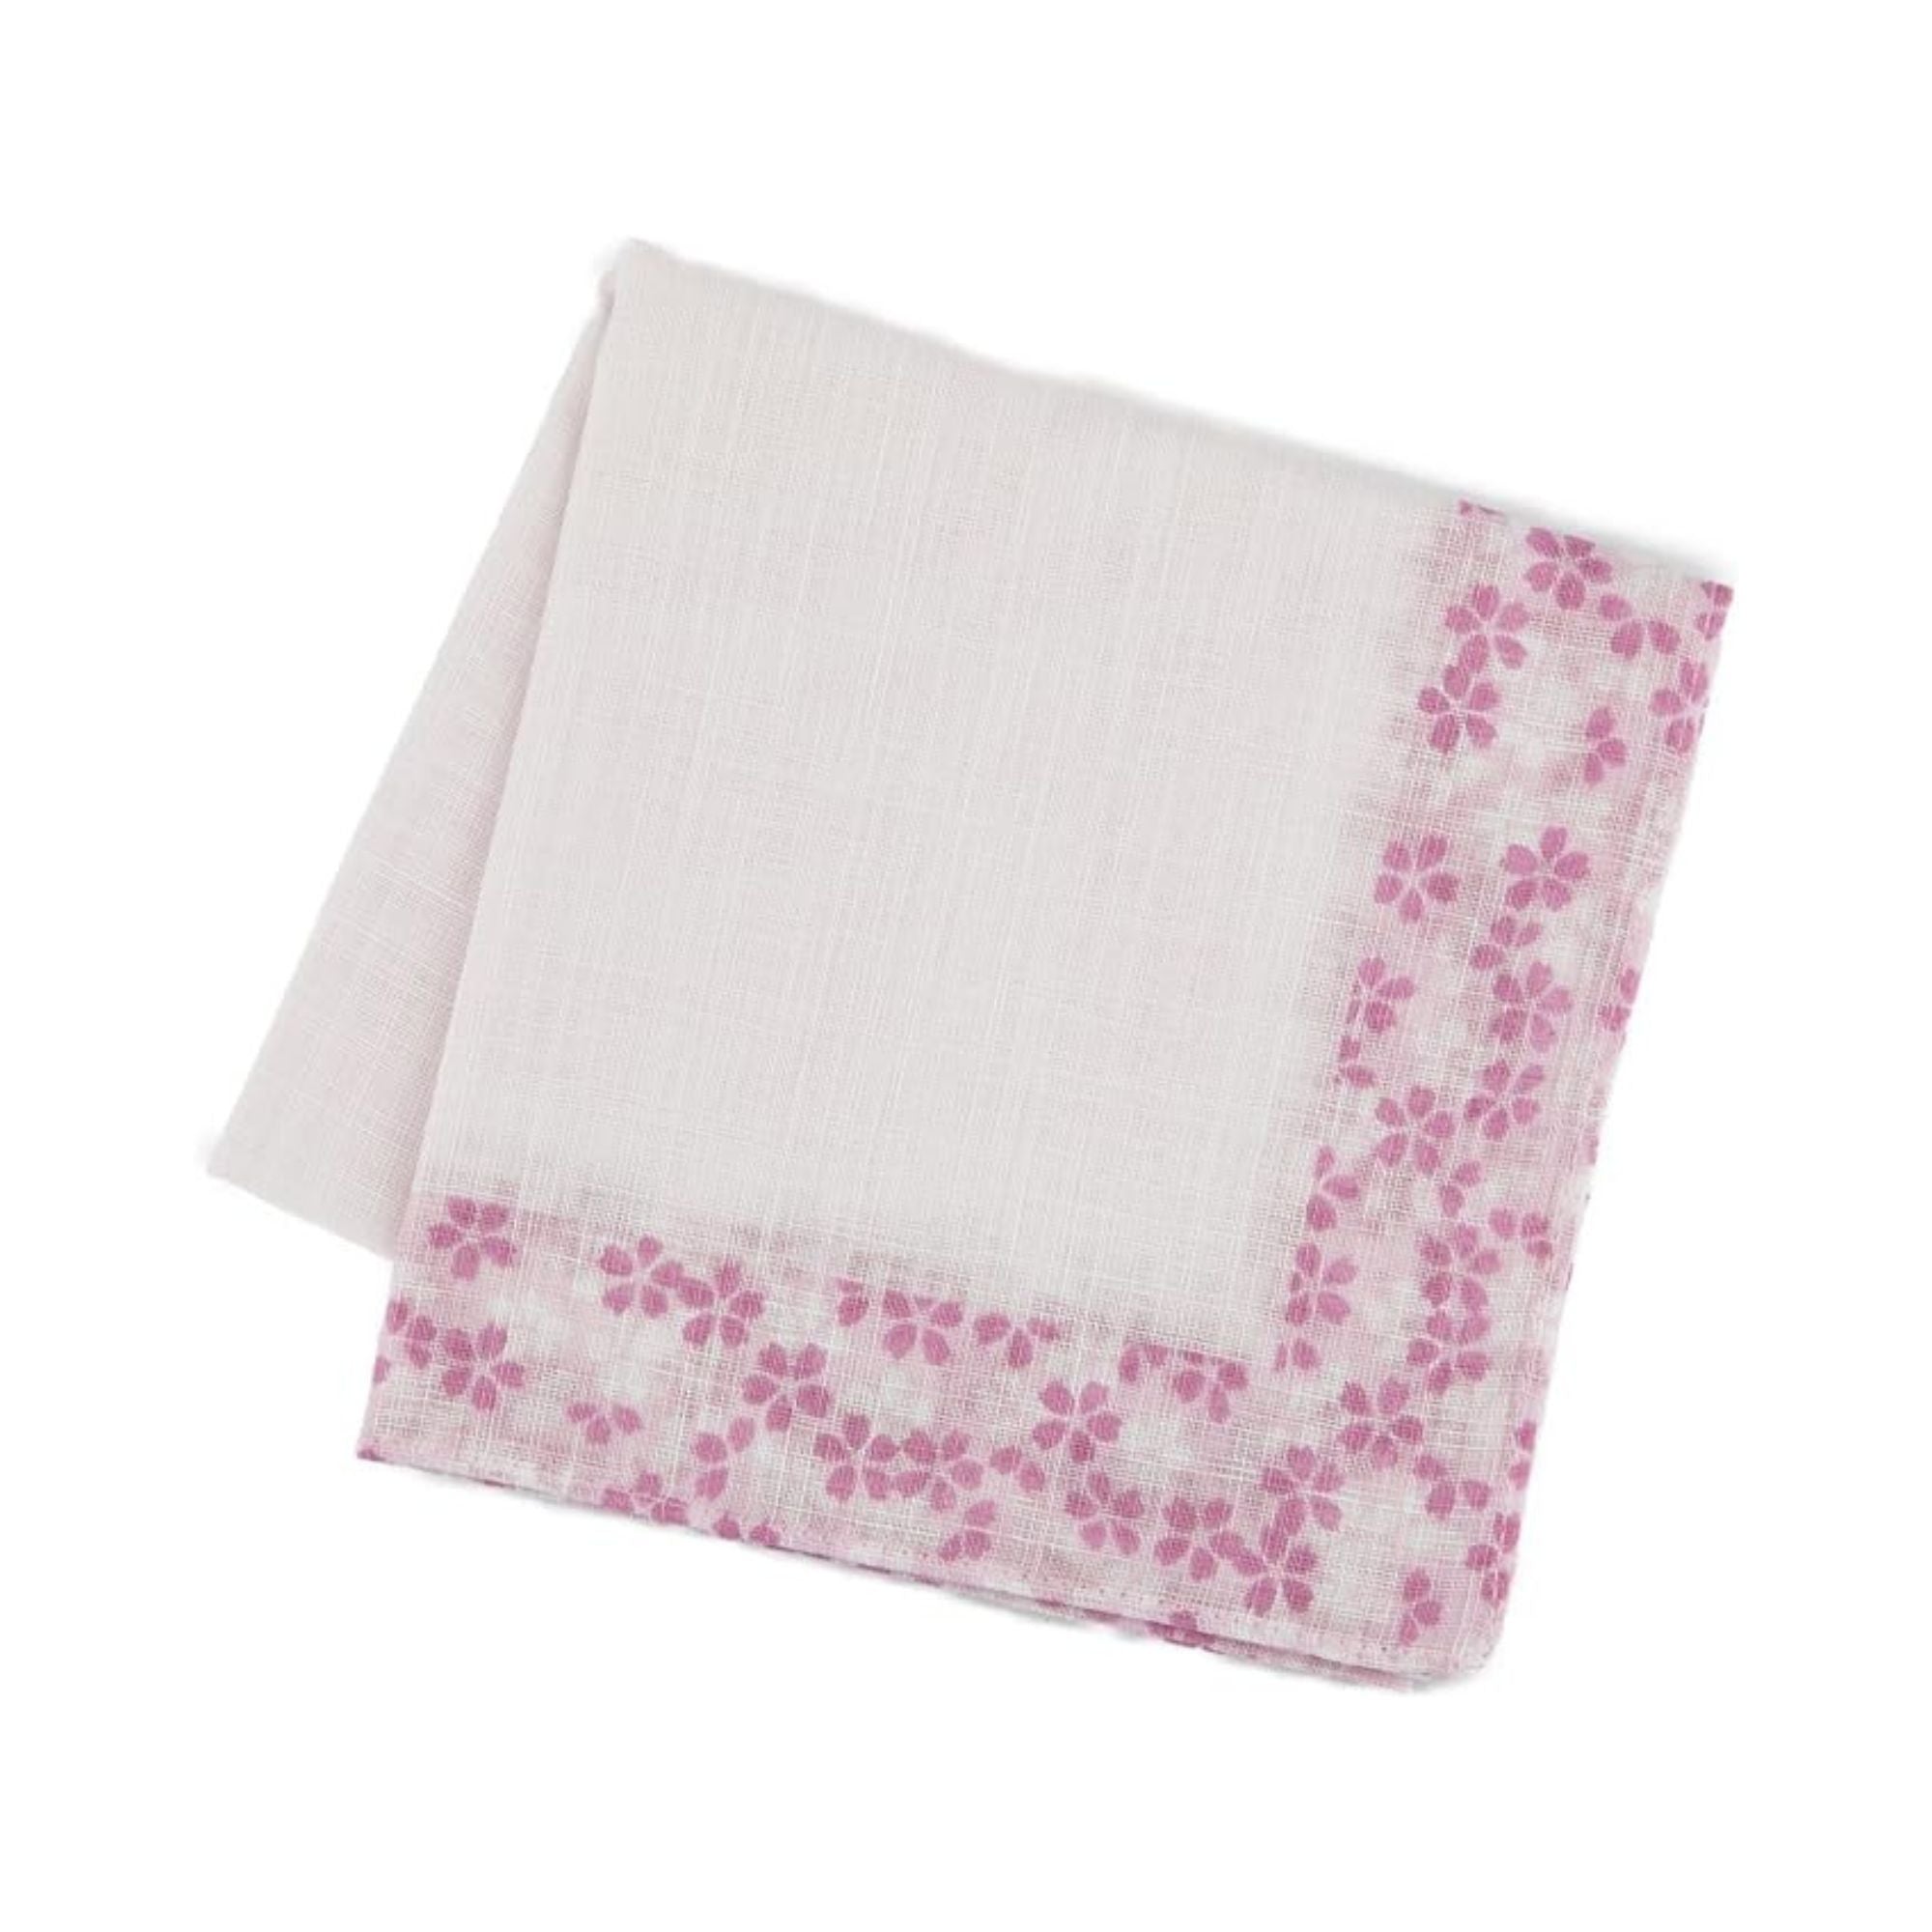 Woven Cotton Small Towel/Handkerchief